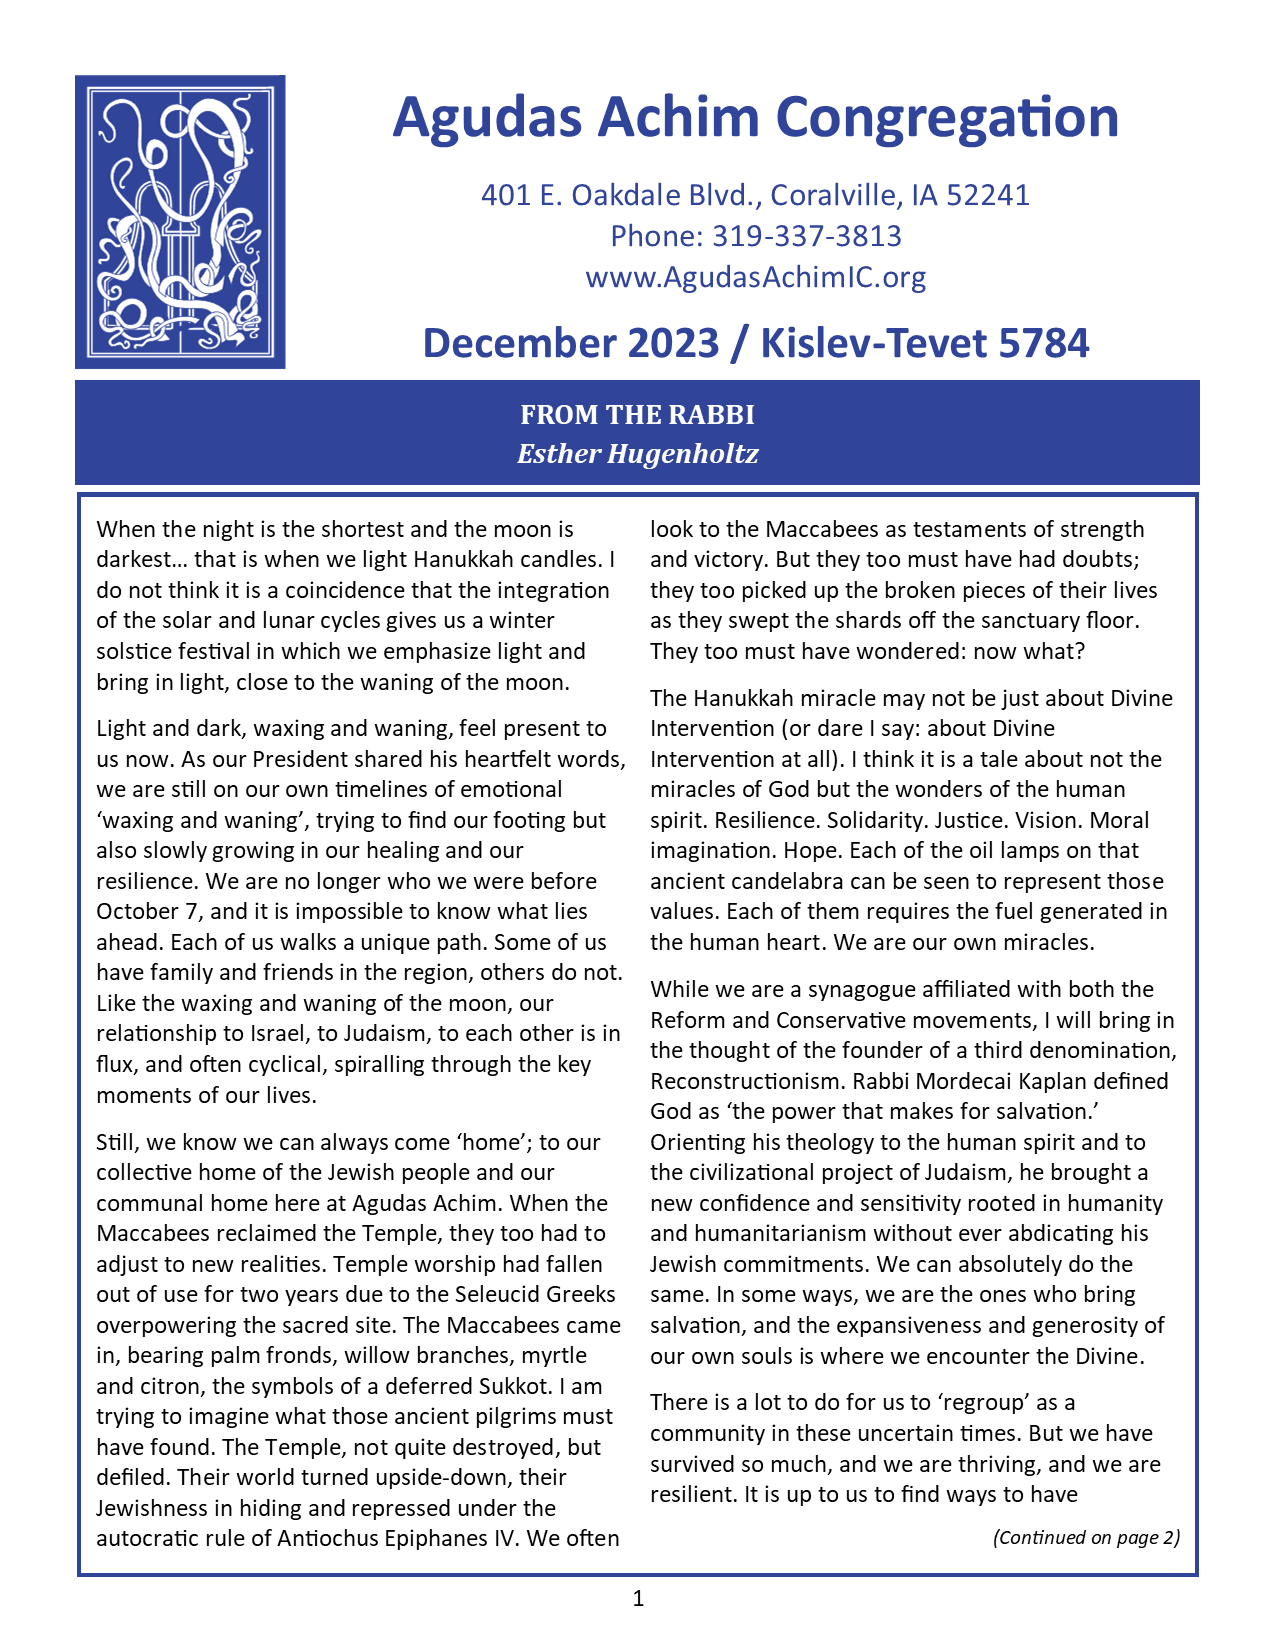 December 2023 Bulletin Cover